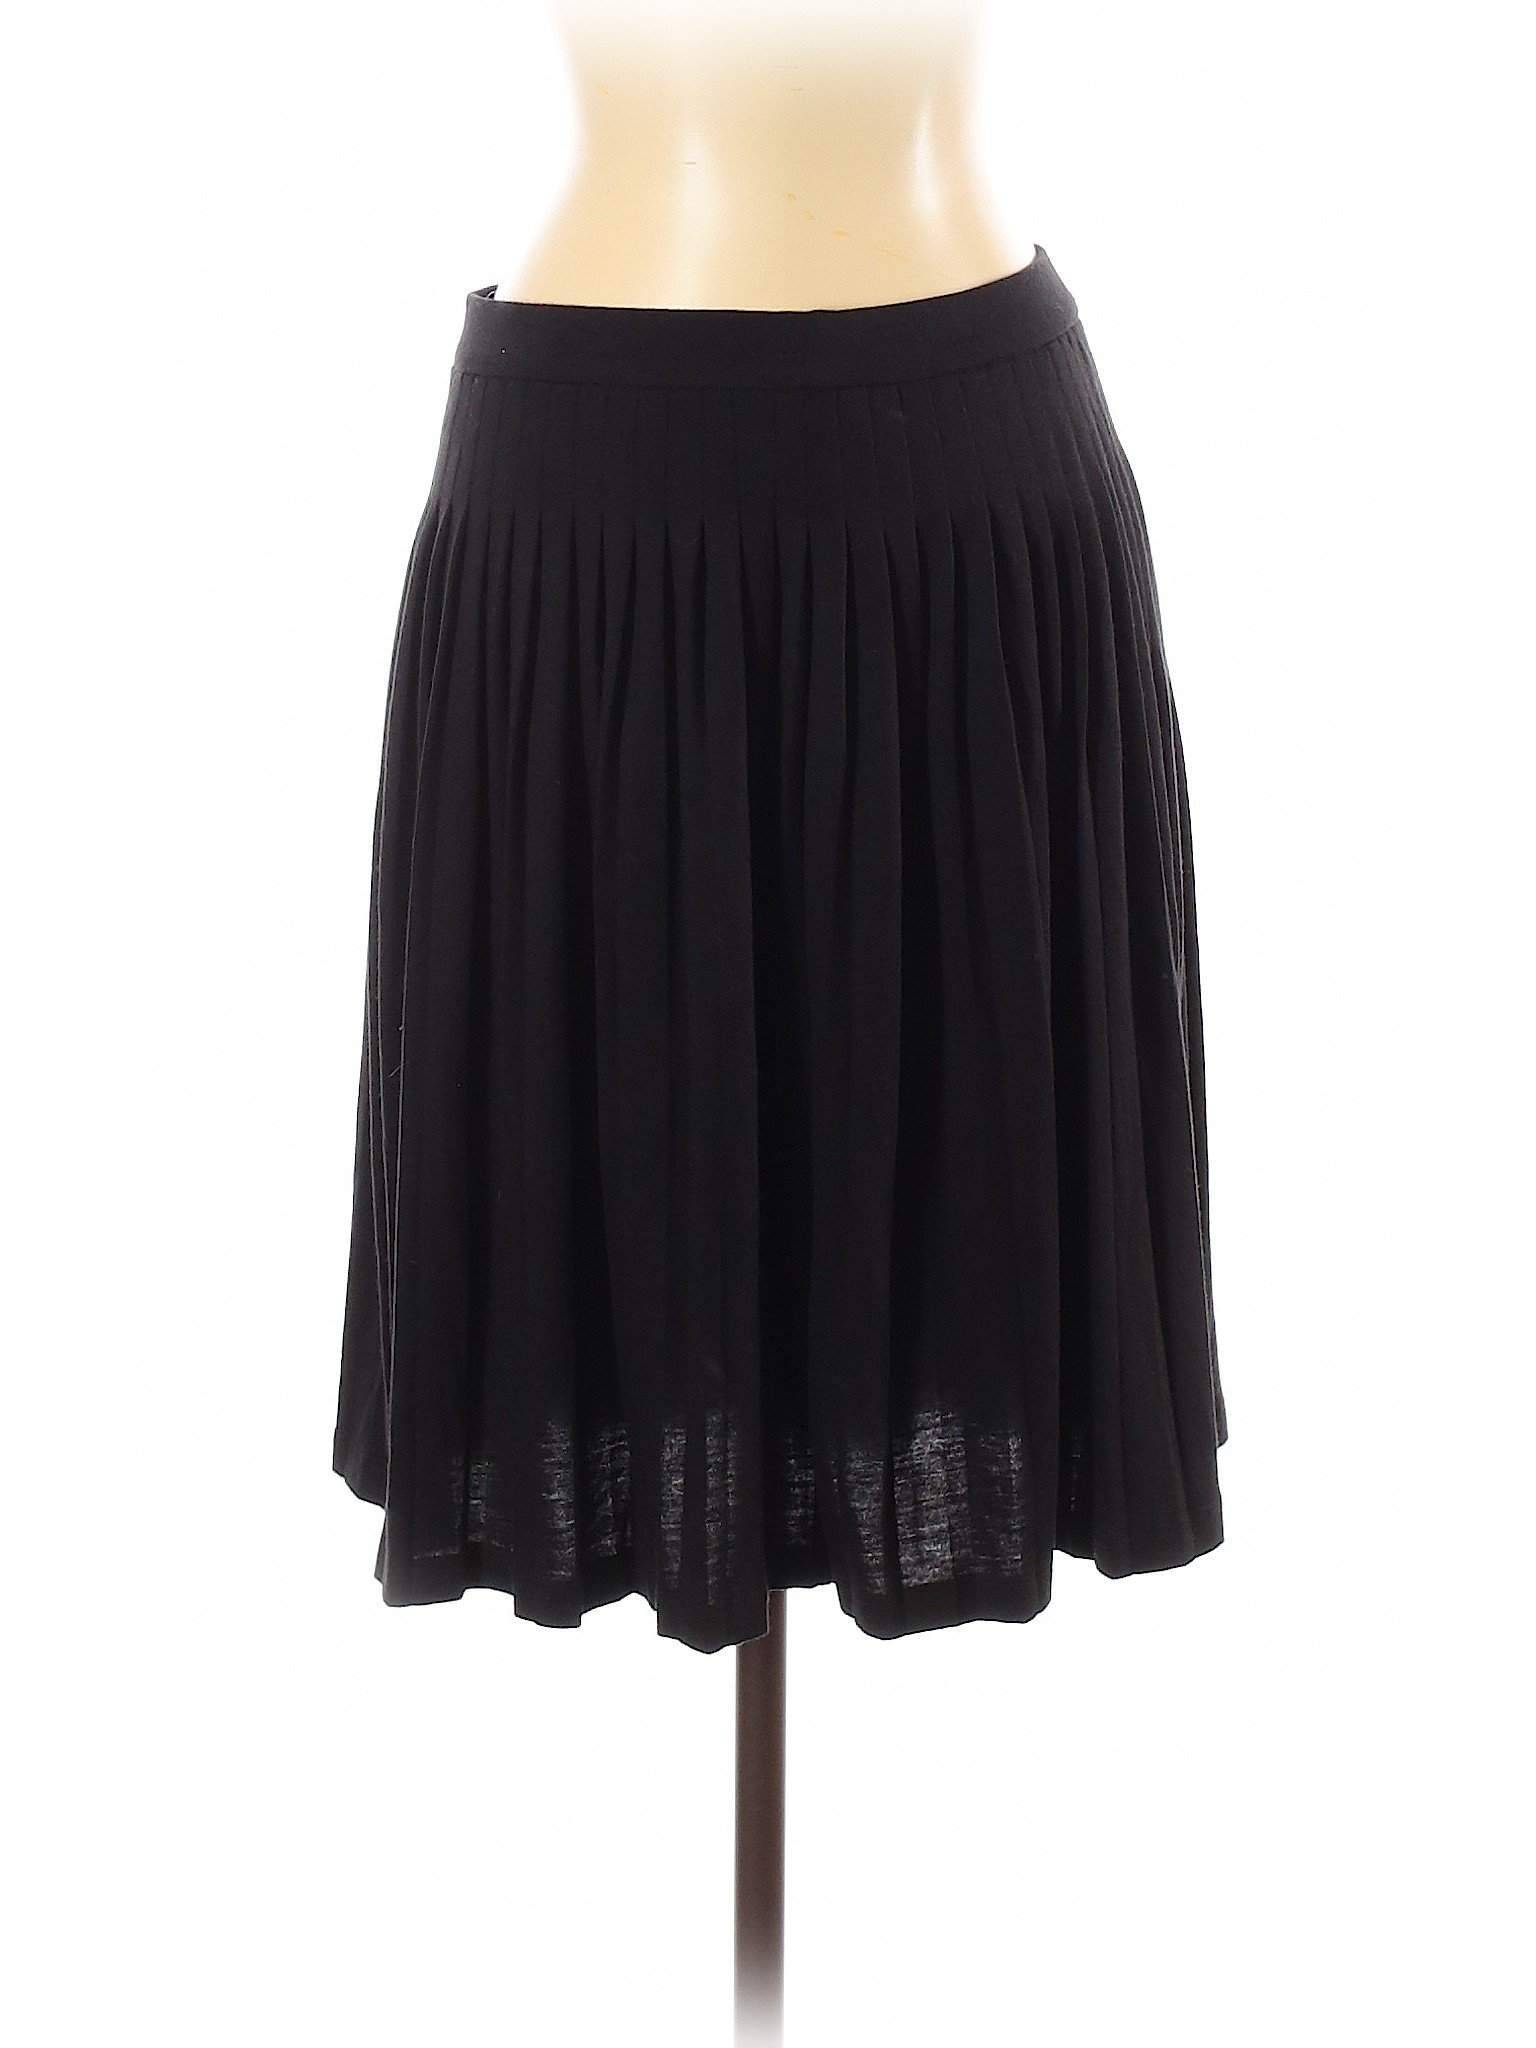 Simply Vera Vera Wang Women Black Casual Skirt XS | eBay